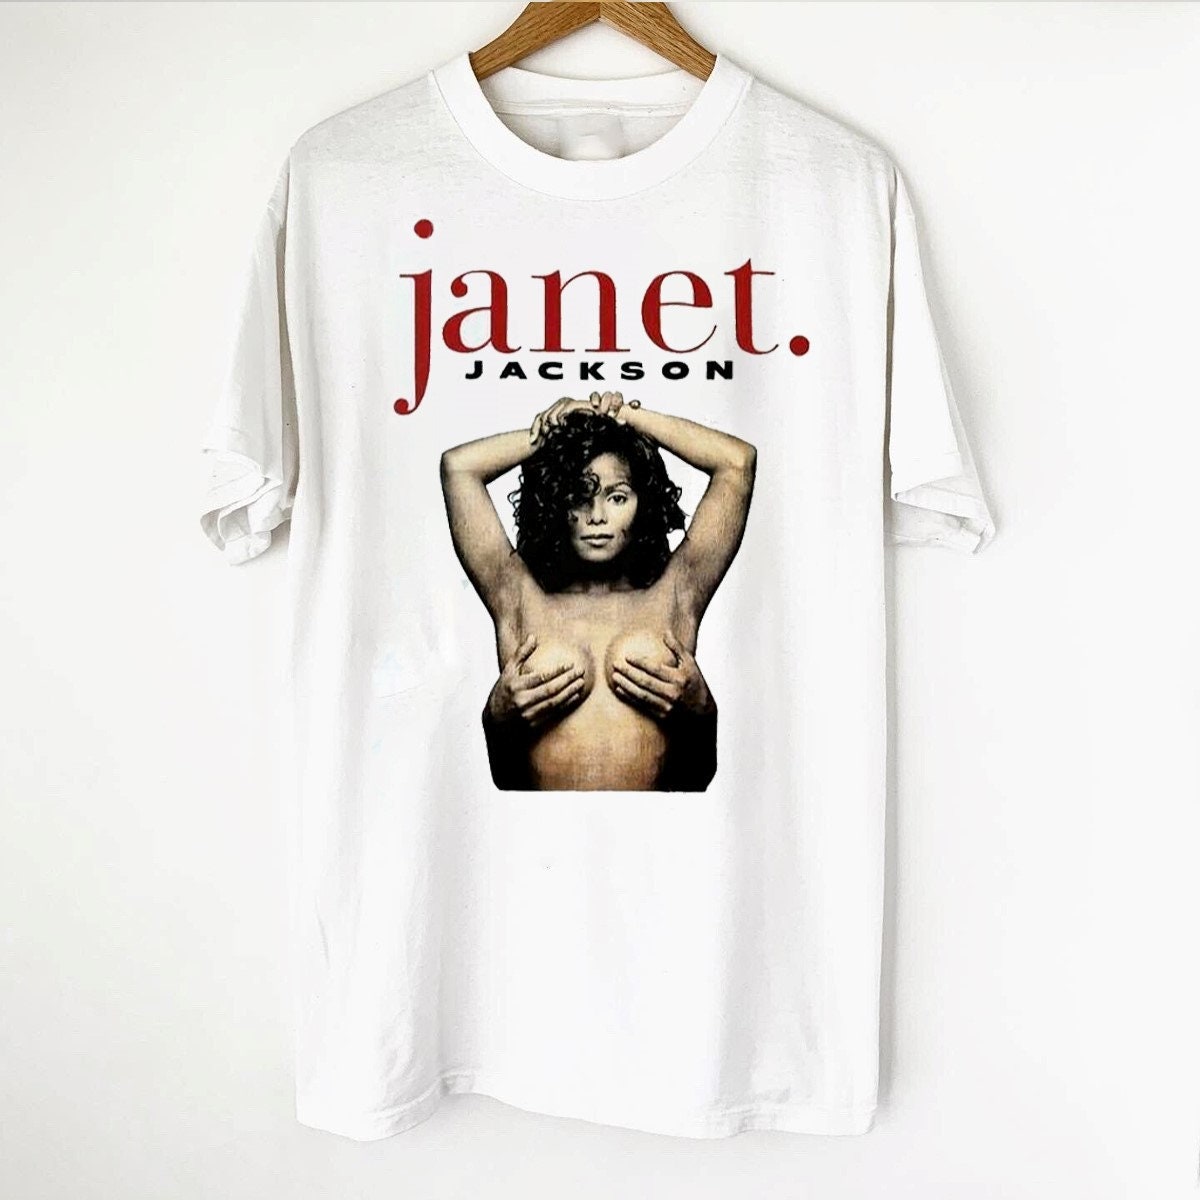 Janet Jackson Palau Sant Jordi Barcelona Tour 1995 TShirt, Janet Jackson World Tour Barcelona Shirt, Janet Jackson Tour Shirt, 90s Music Tee